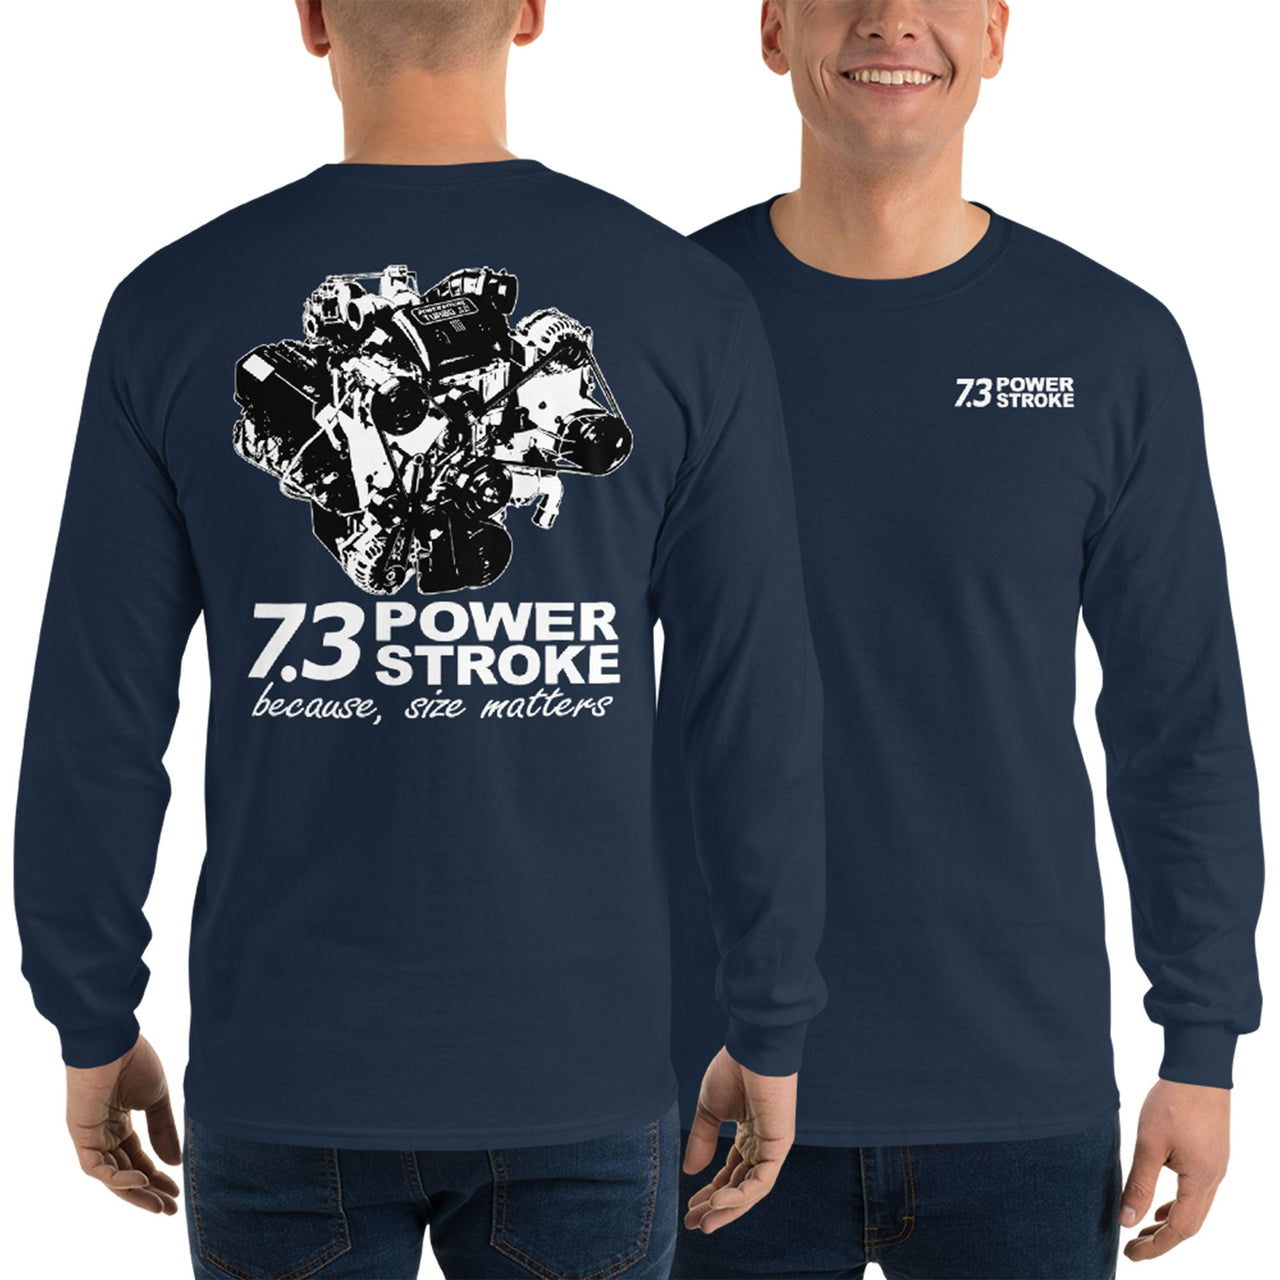 7.3 Power Stroke Size Matters Long Sleeve T-Shirt modeled in navy